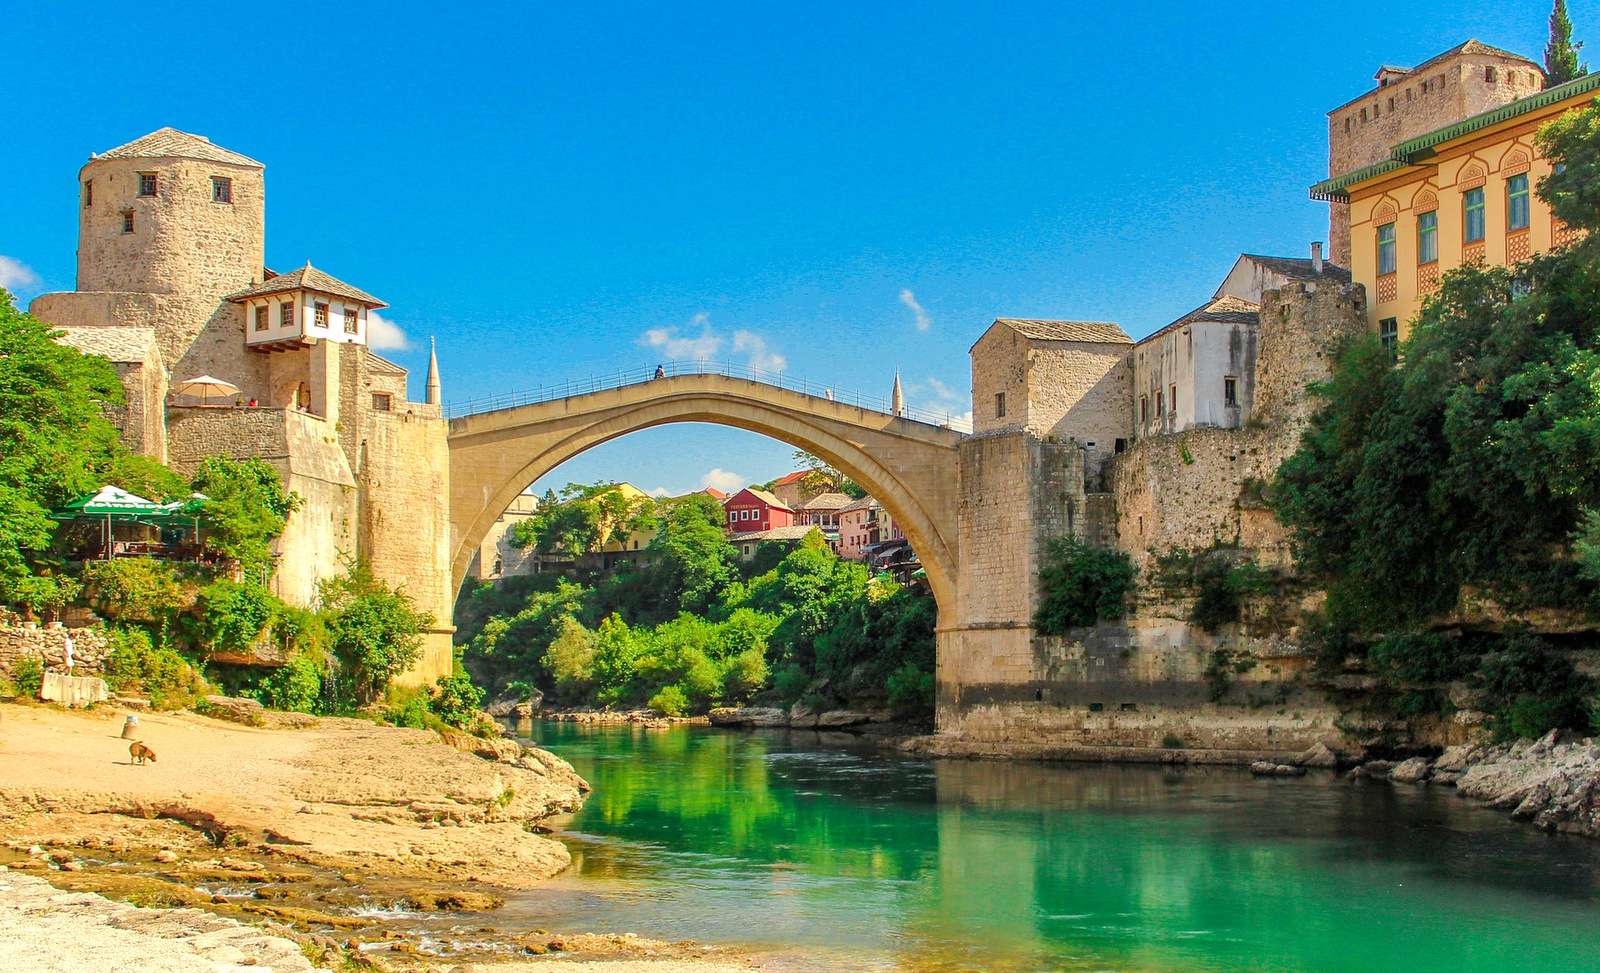 Stone Old Bridge in Mostar jigsaw puzzle online